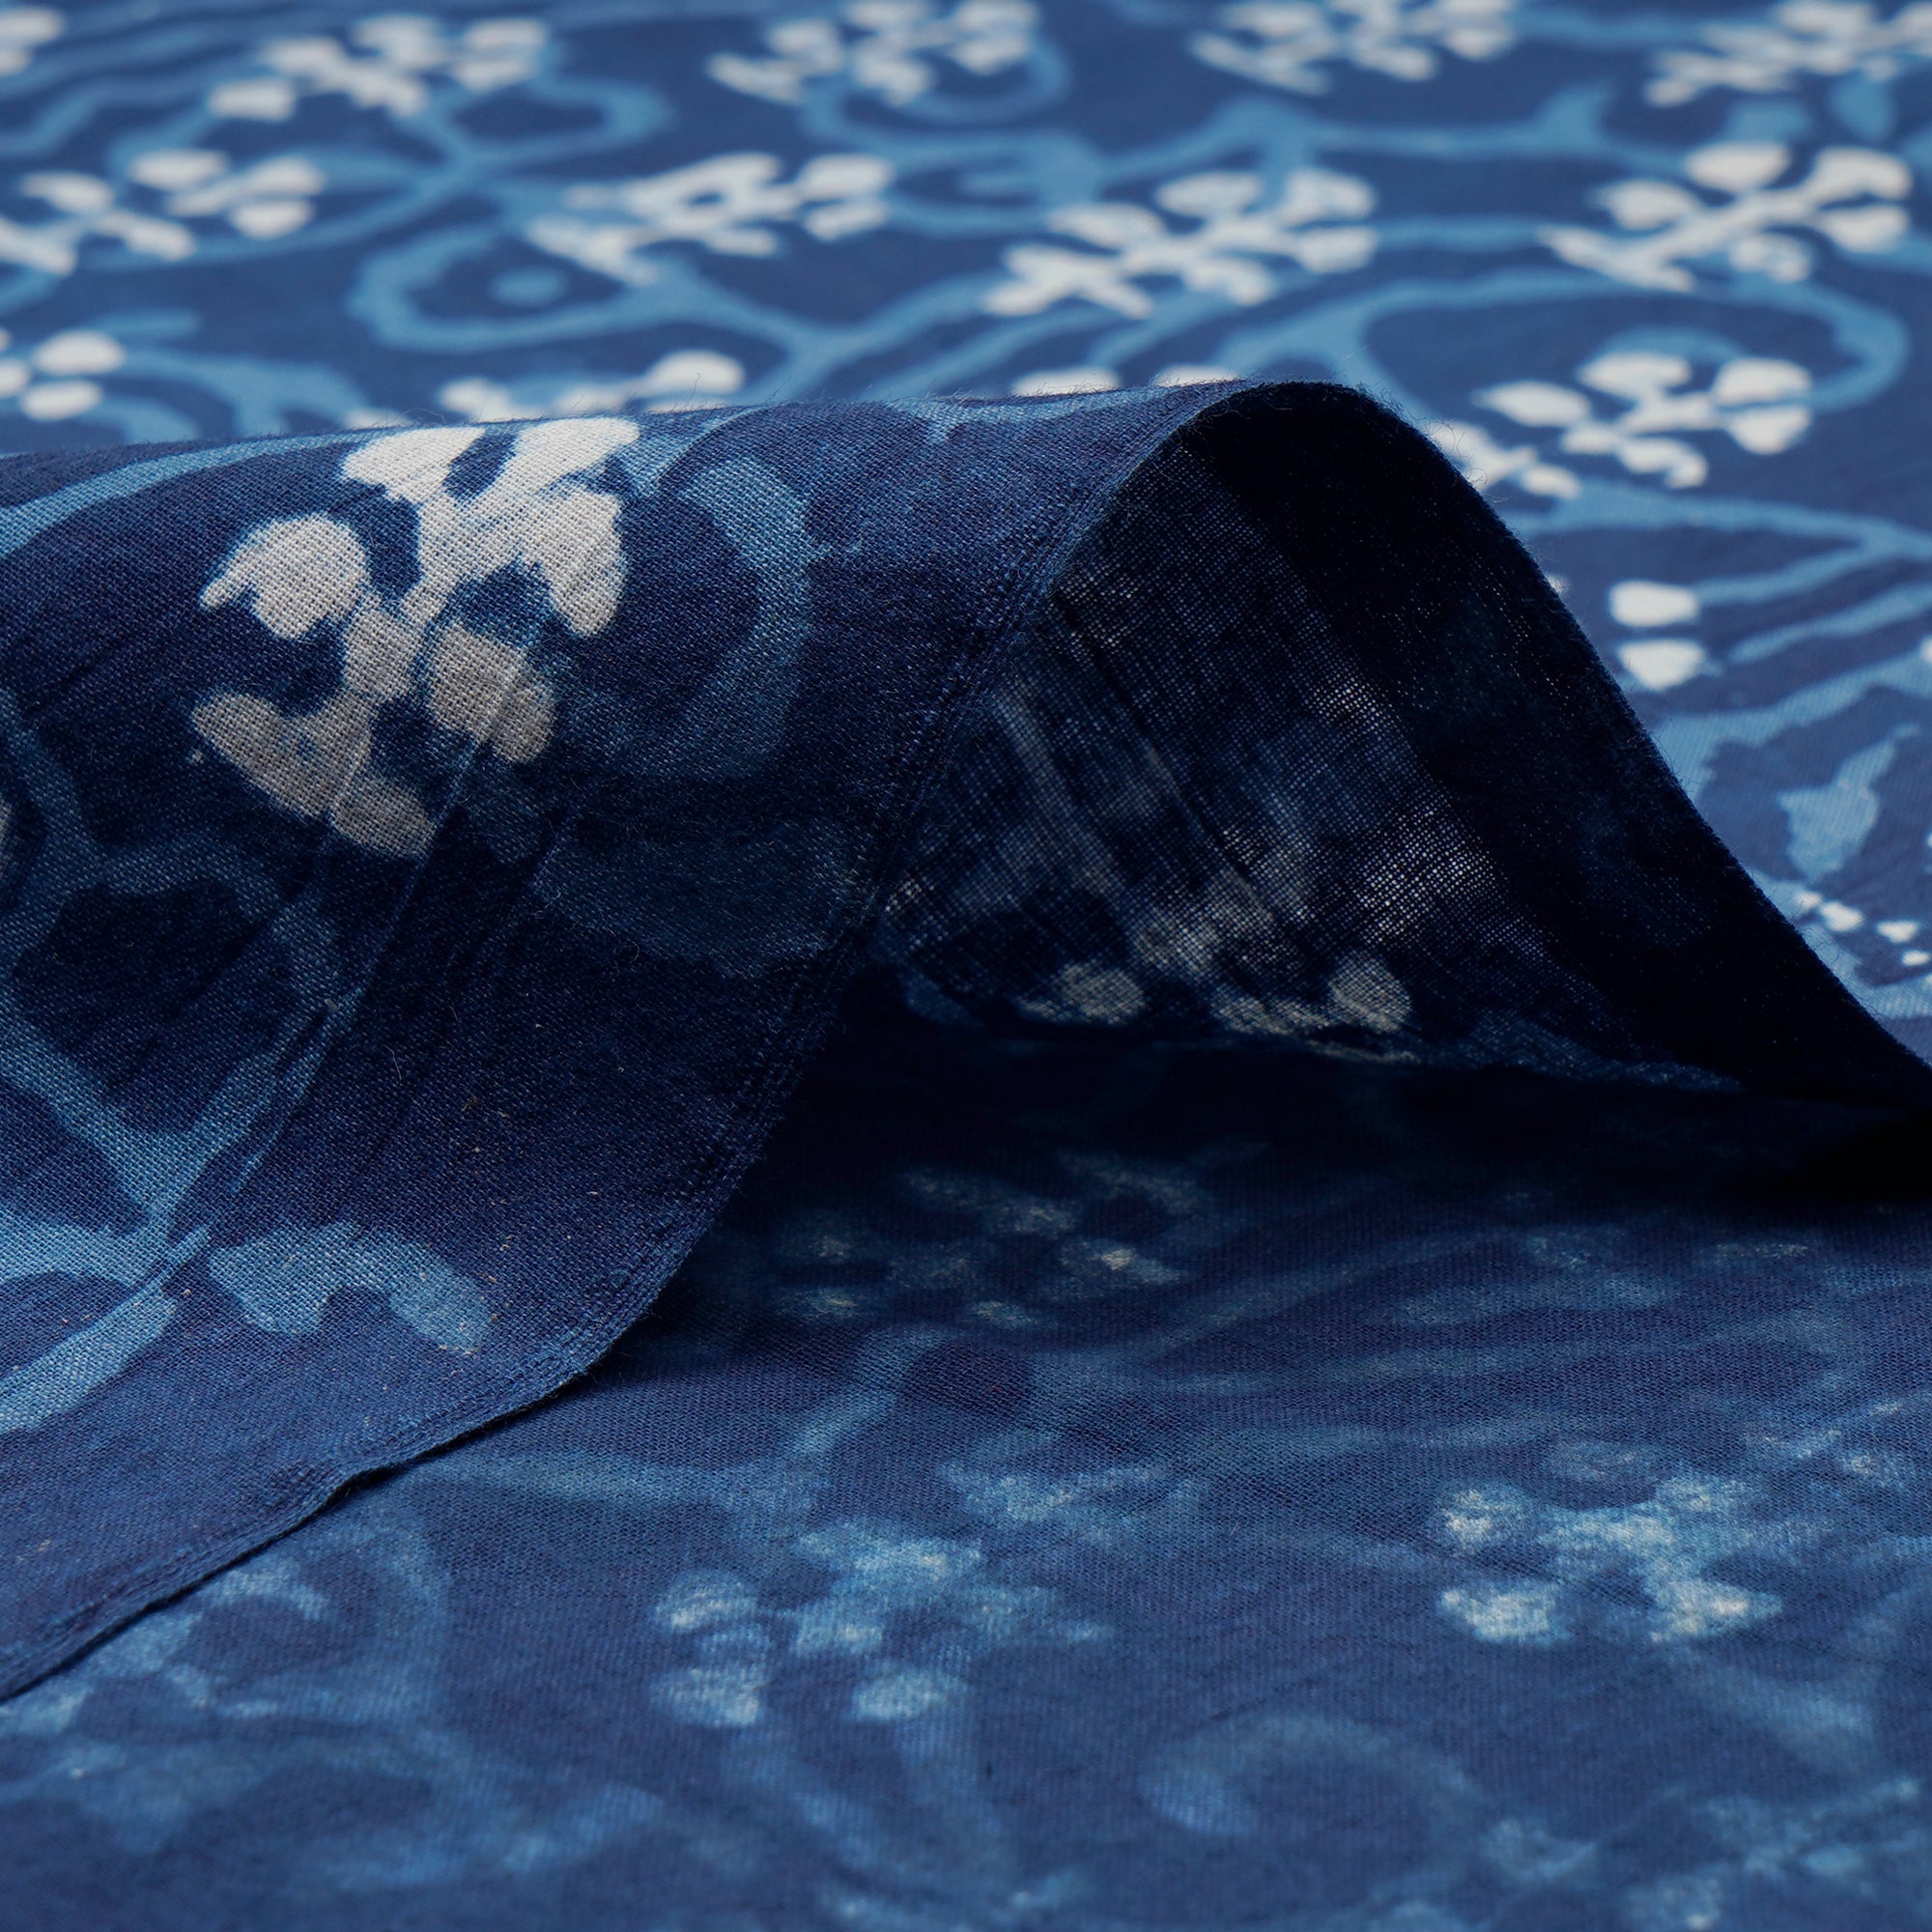 Indigo Blue Hand Block Natural Dye Dabu Printed Cotton Fabric